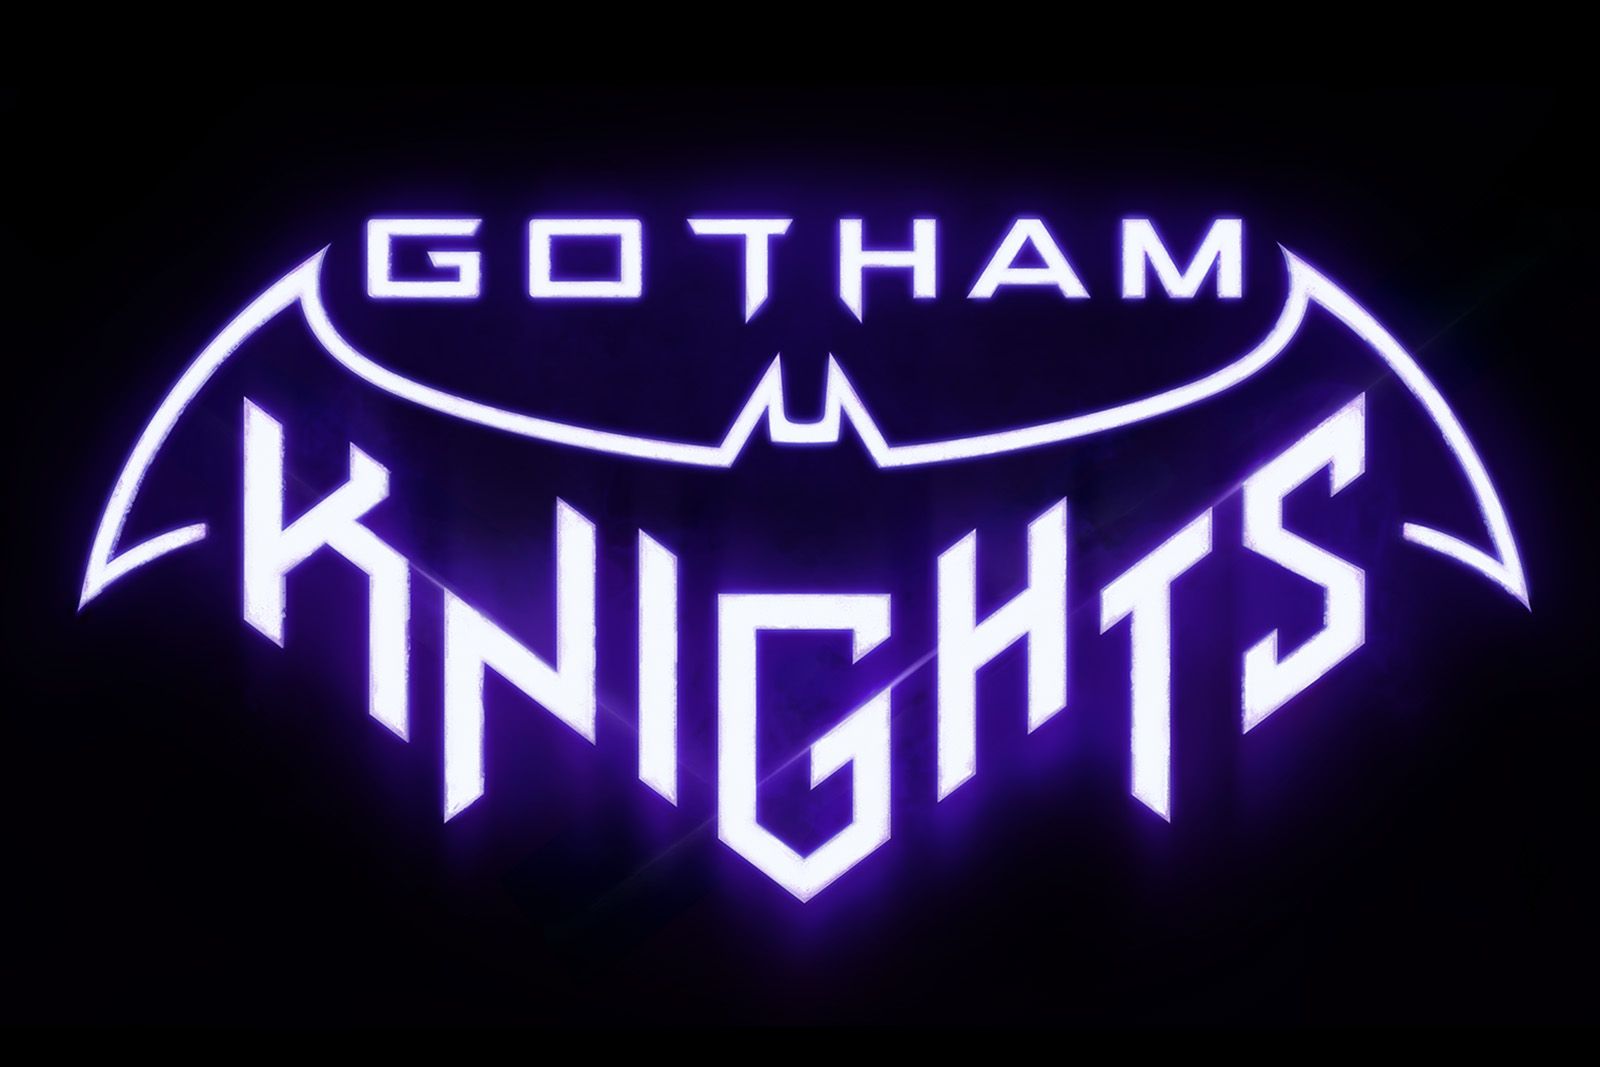 Gotham Knights lead photo 2